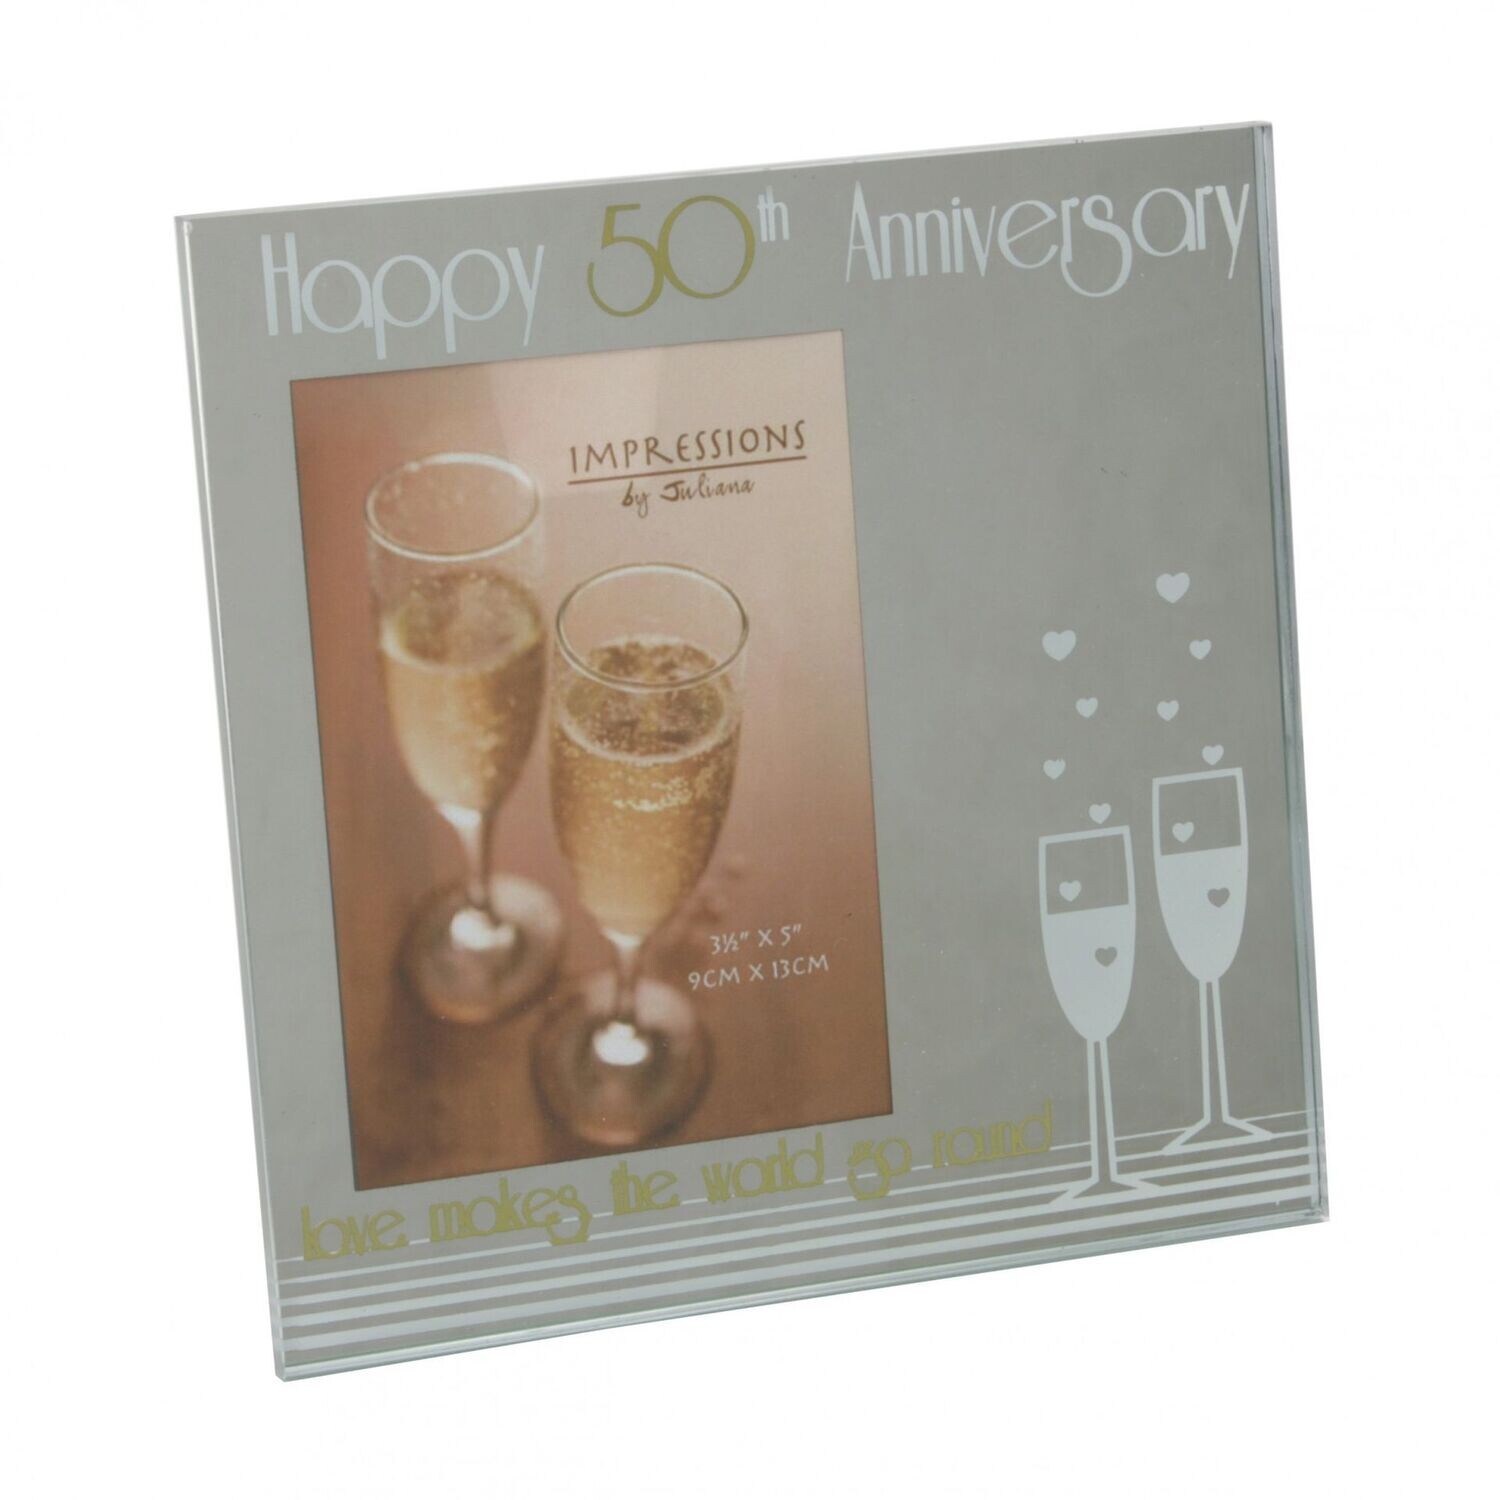 50th Wedding Anniversary glass photo frame